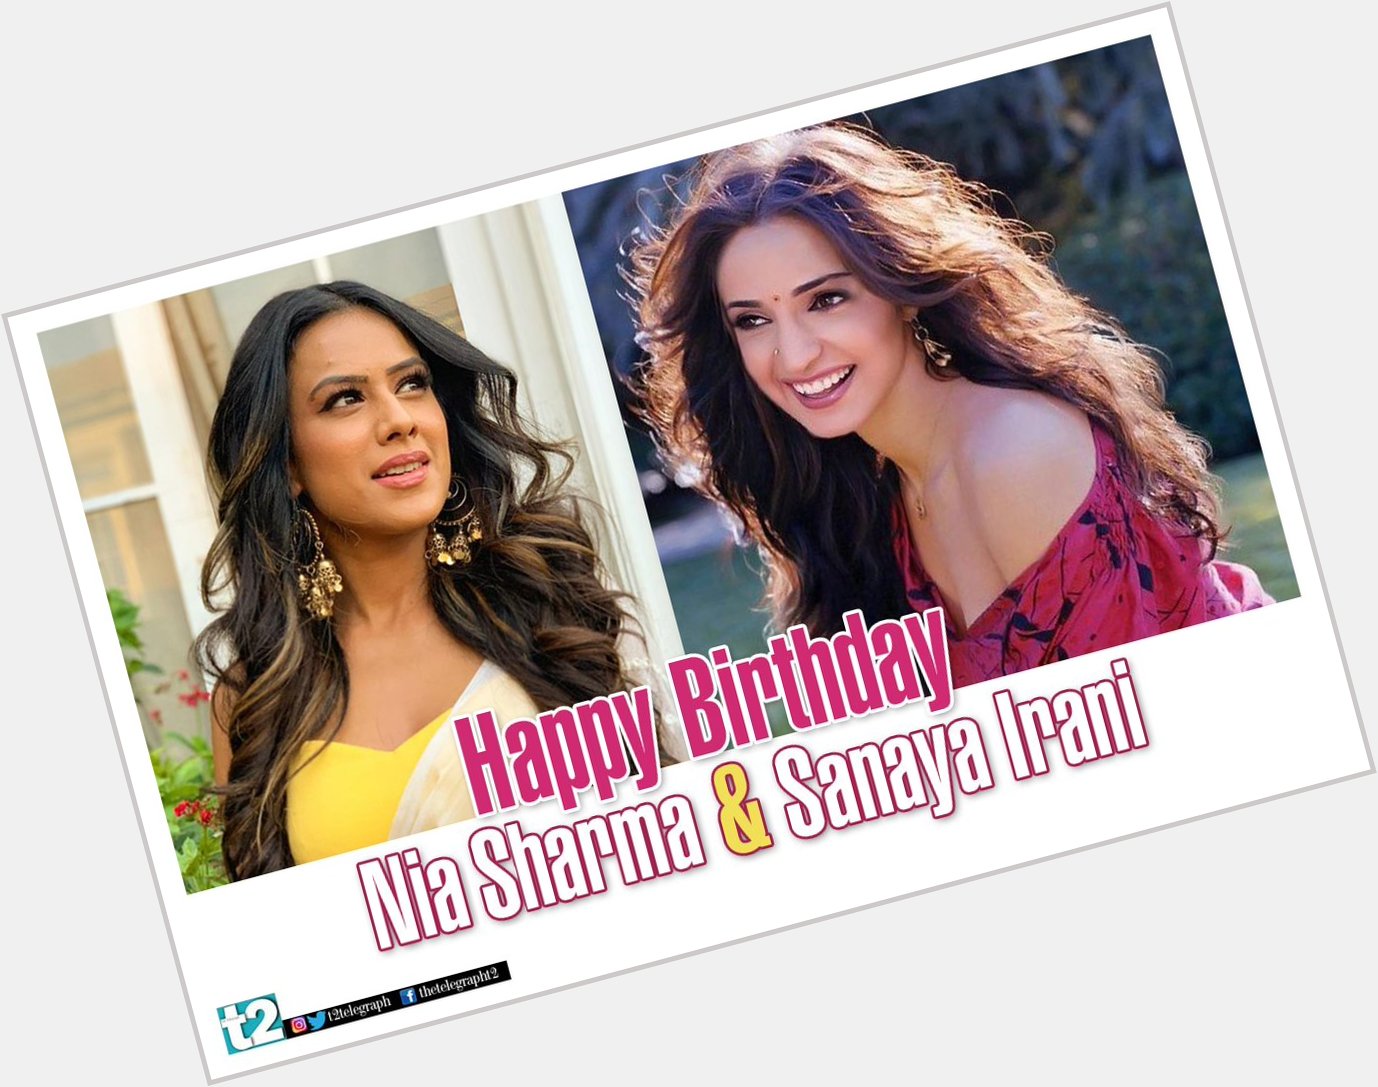 T2 wishes a very happy birthday to small screen stars Sanaya Irani and Nia Sharma 